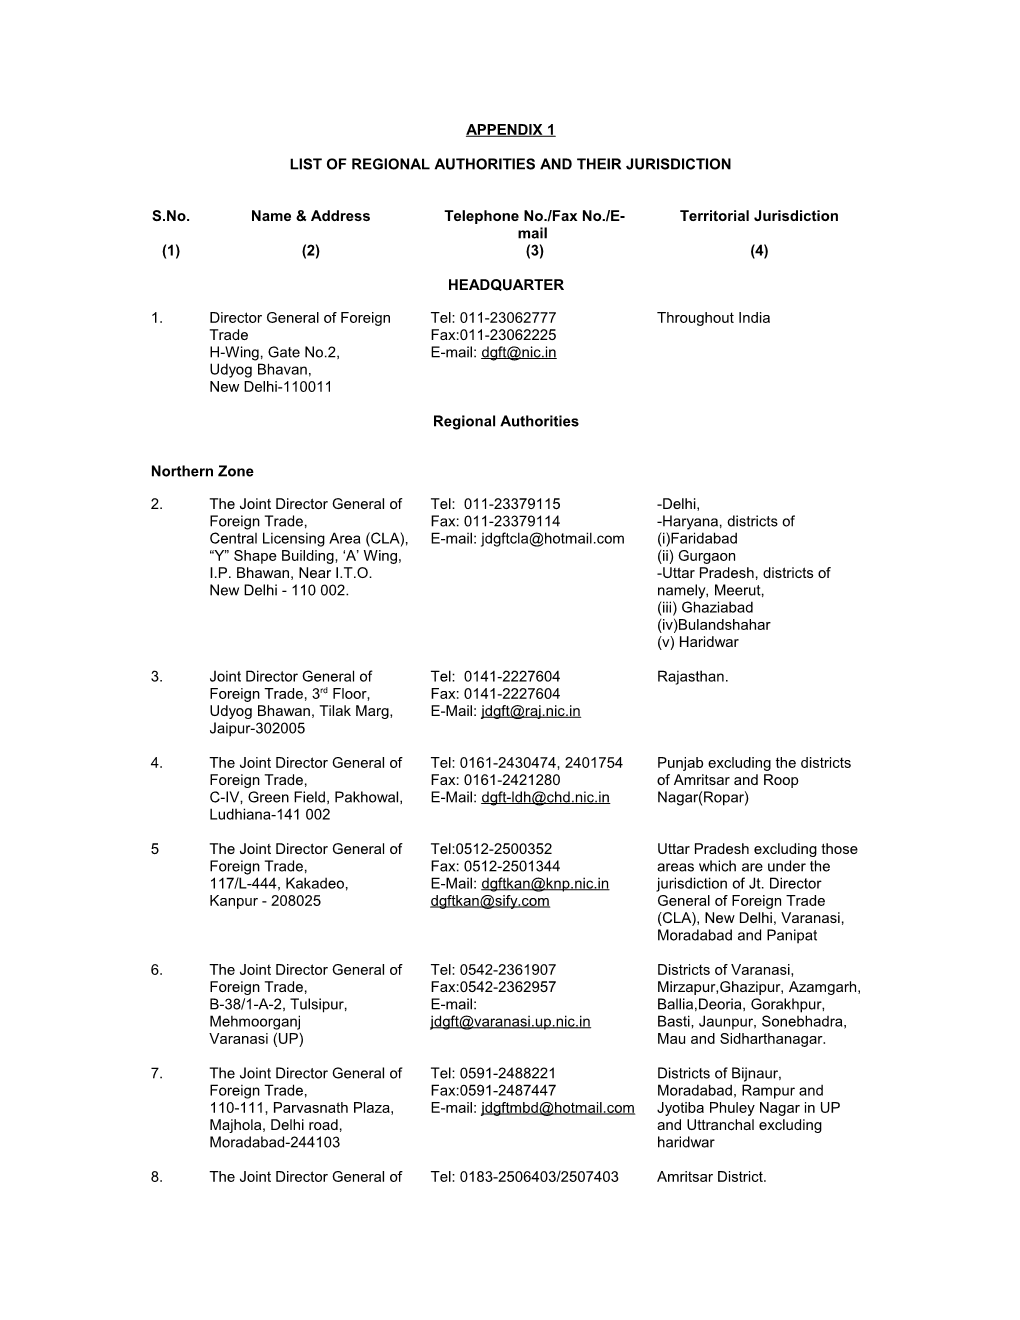 List of Regional Authorities and Their Jurisdiction